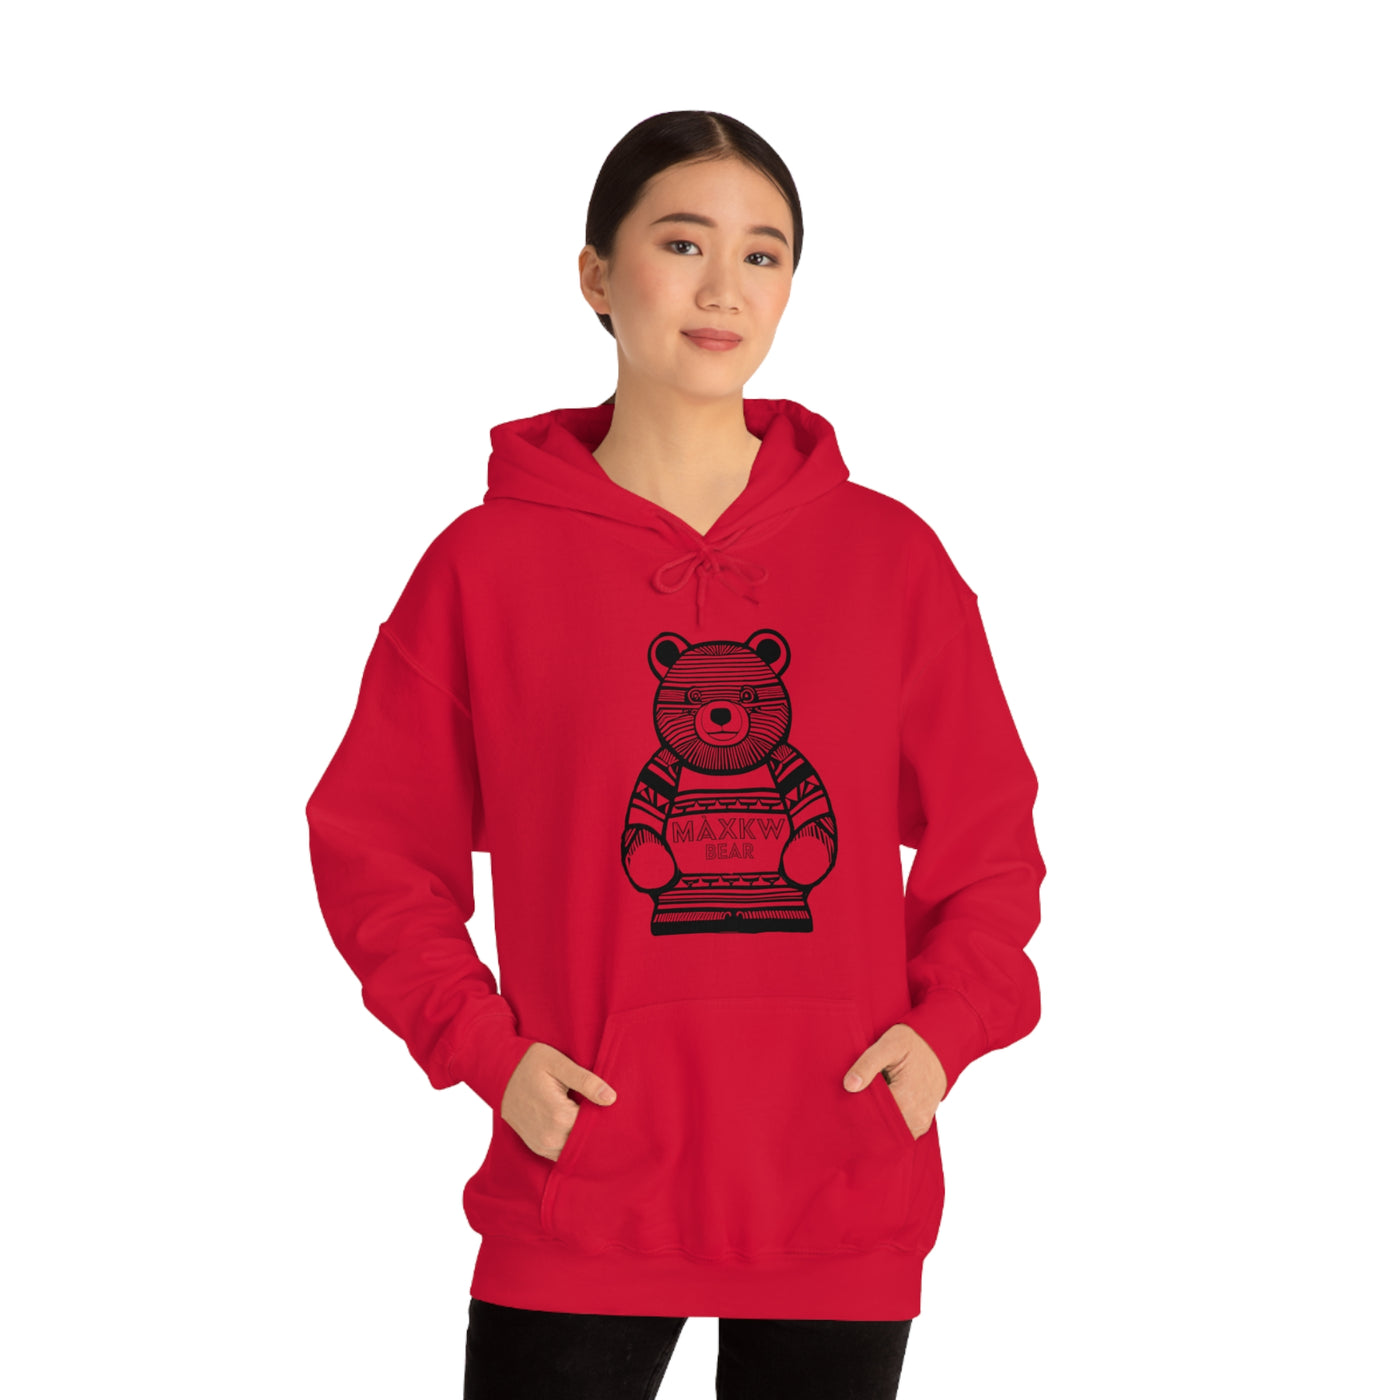 Màxkw Unisex Heavy Blend™ Hooded Sweatshirt - Merge Fashion and Heritage - Indigenous Love